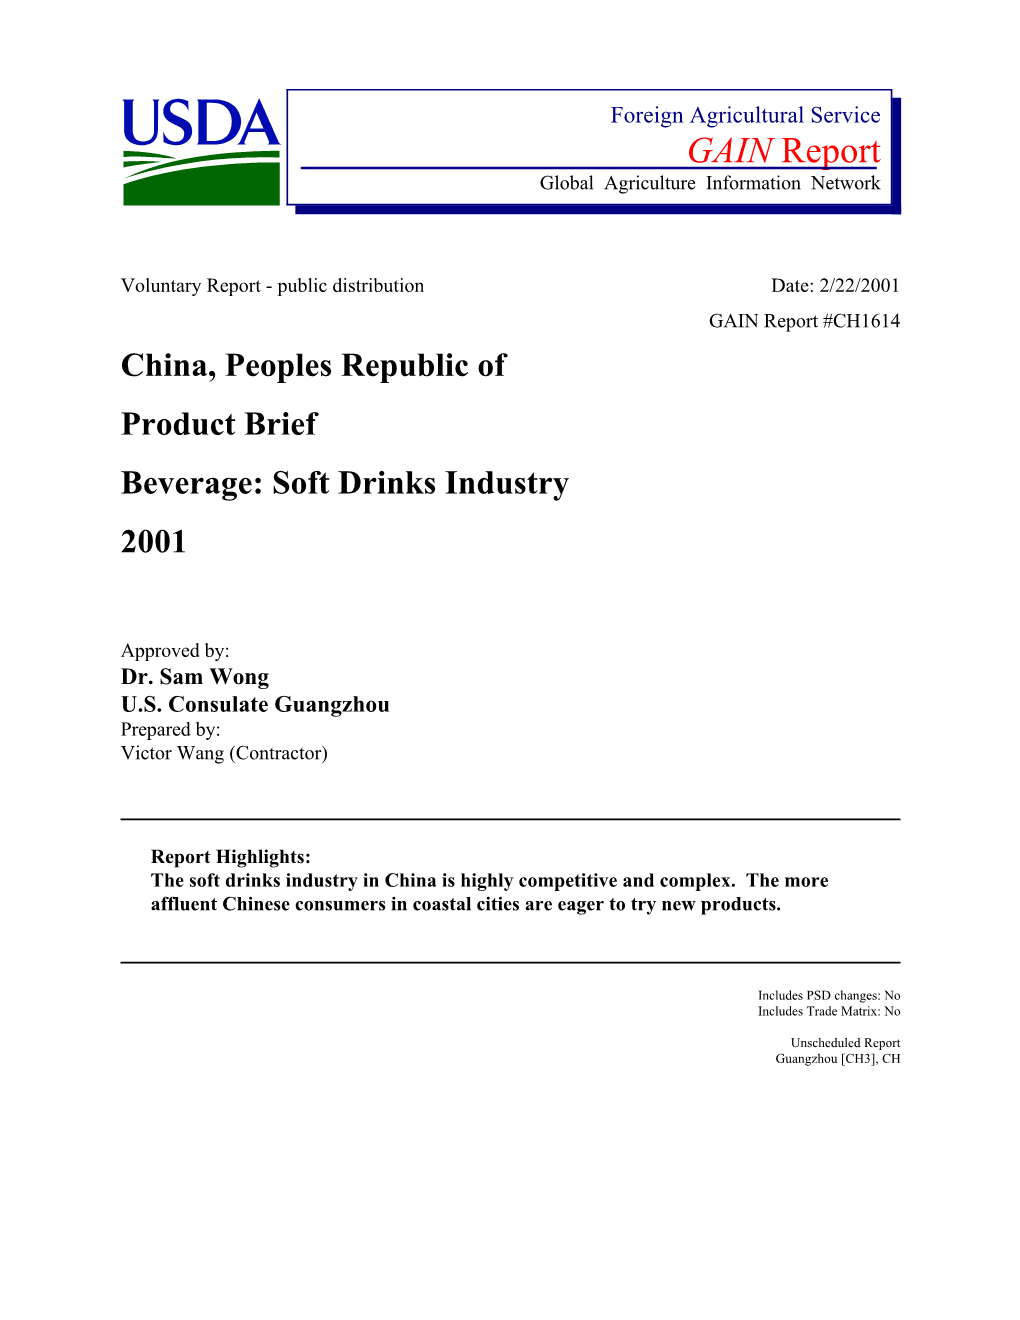 Soft Drinks Industry 2001